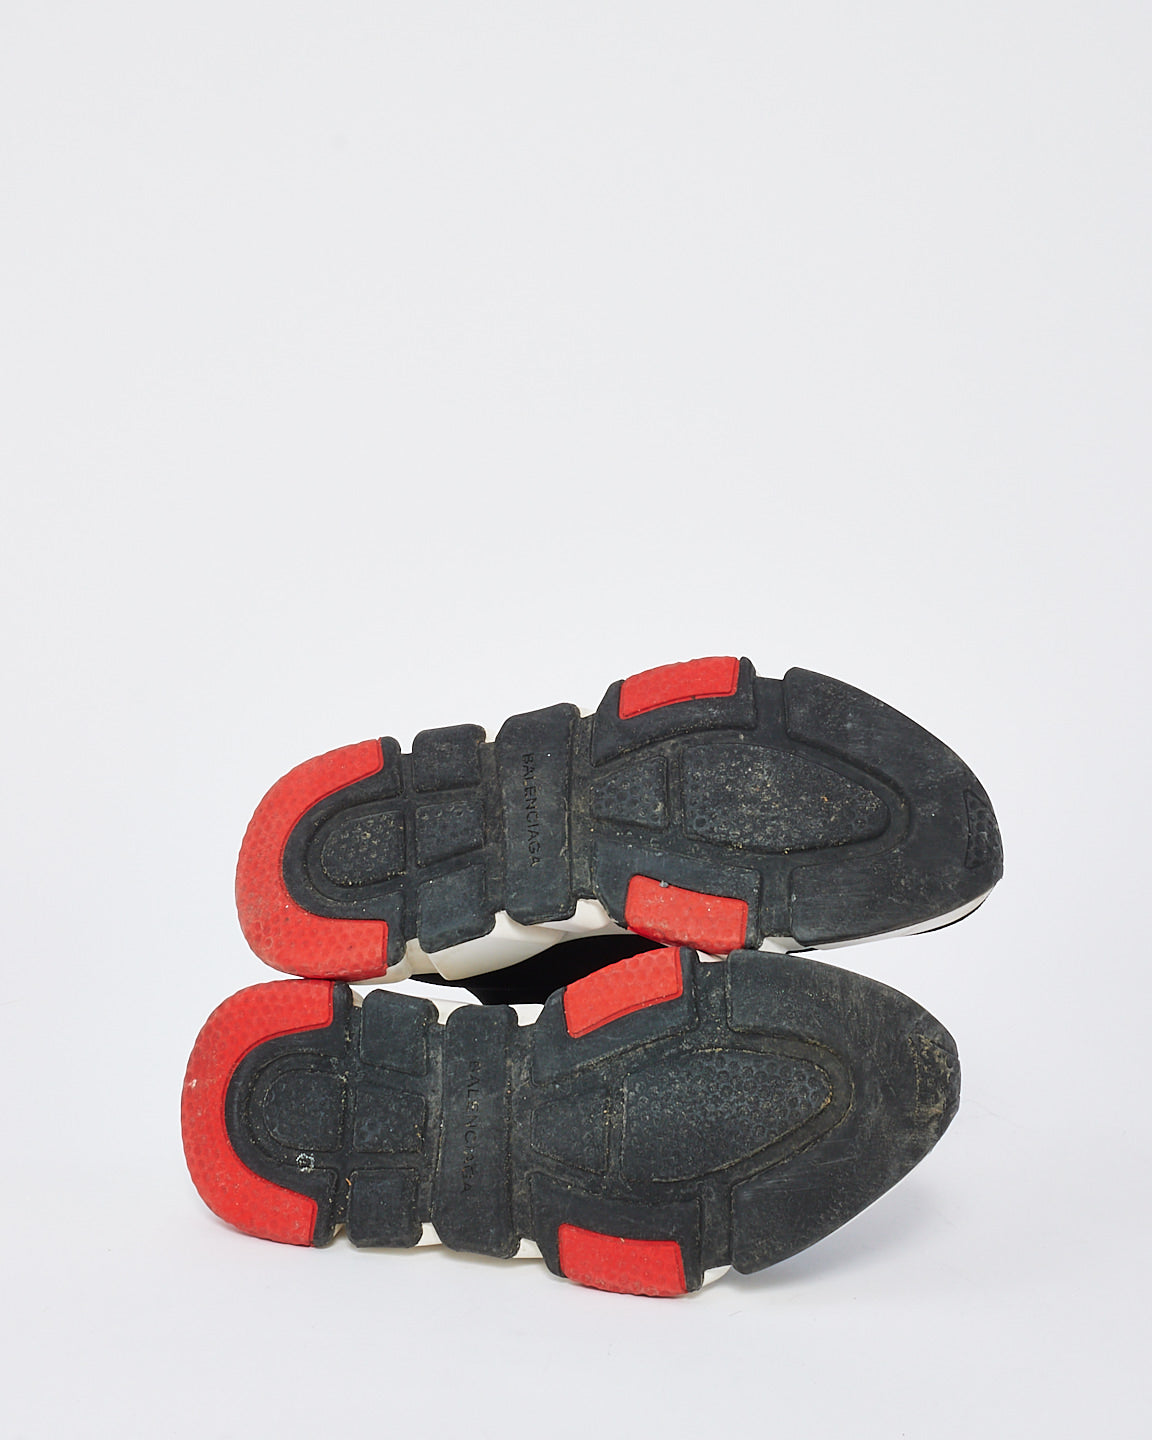 Balenciaga Black Knit Speed Sneakers - 40